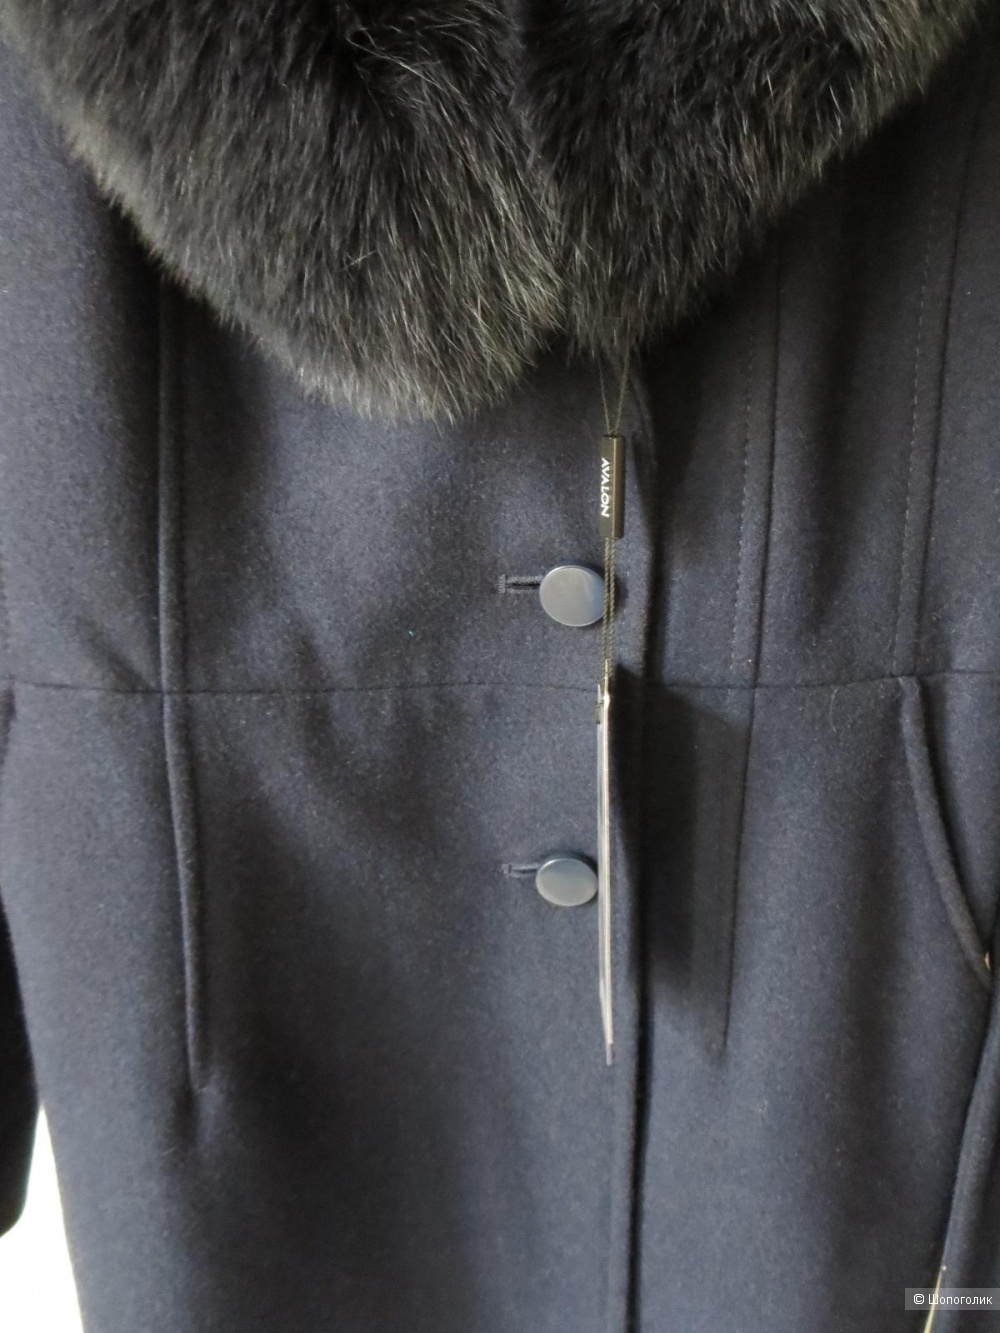 Женское зимнее пальто AVALON 1982 46 размер